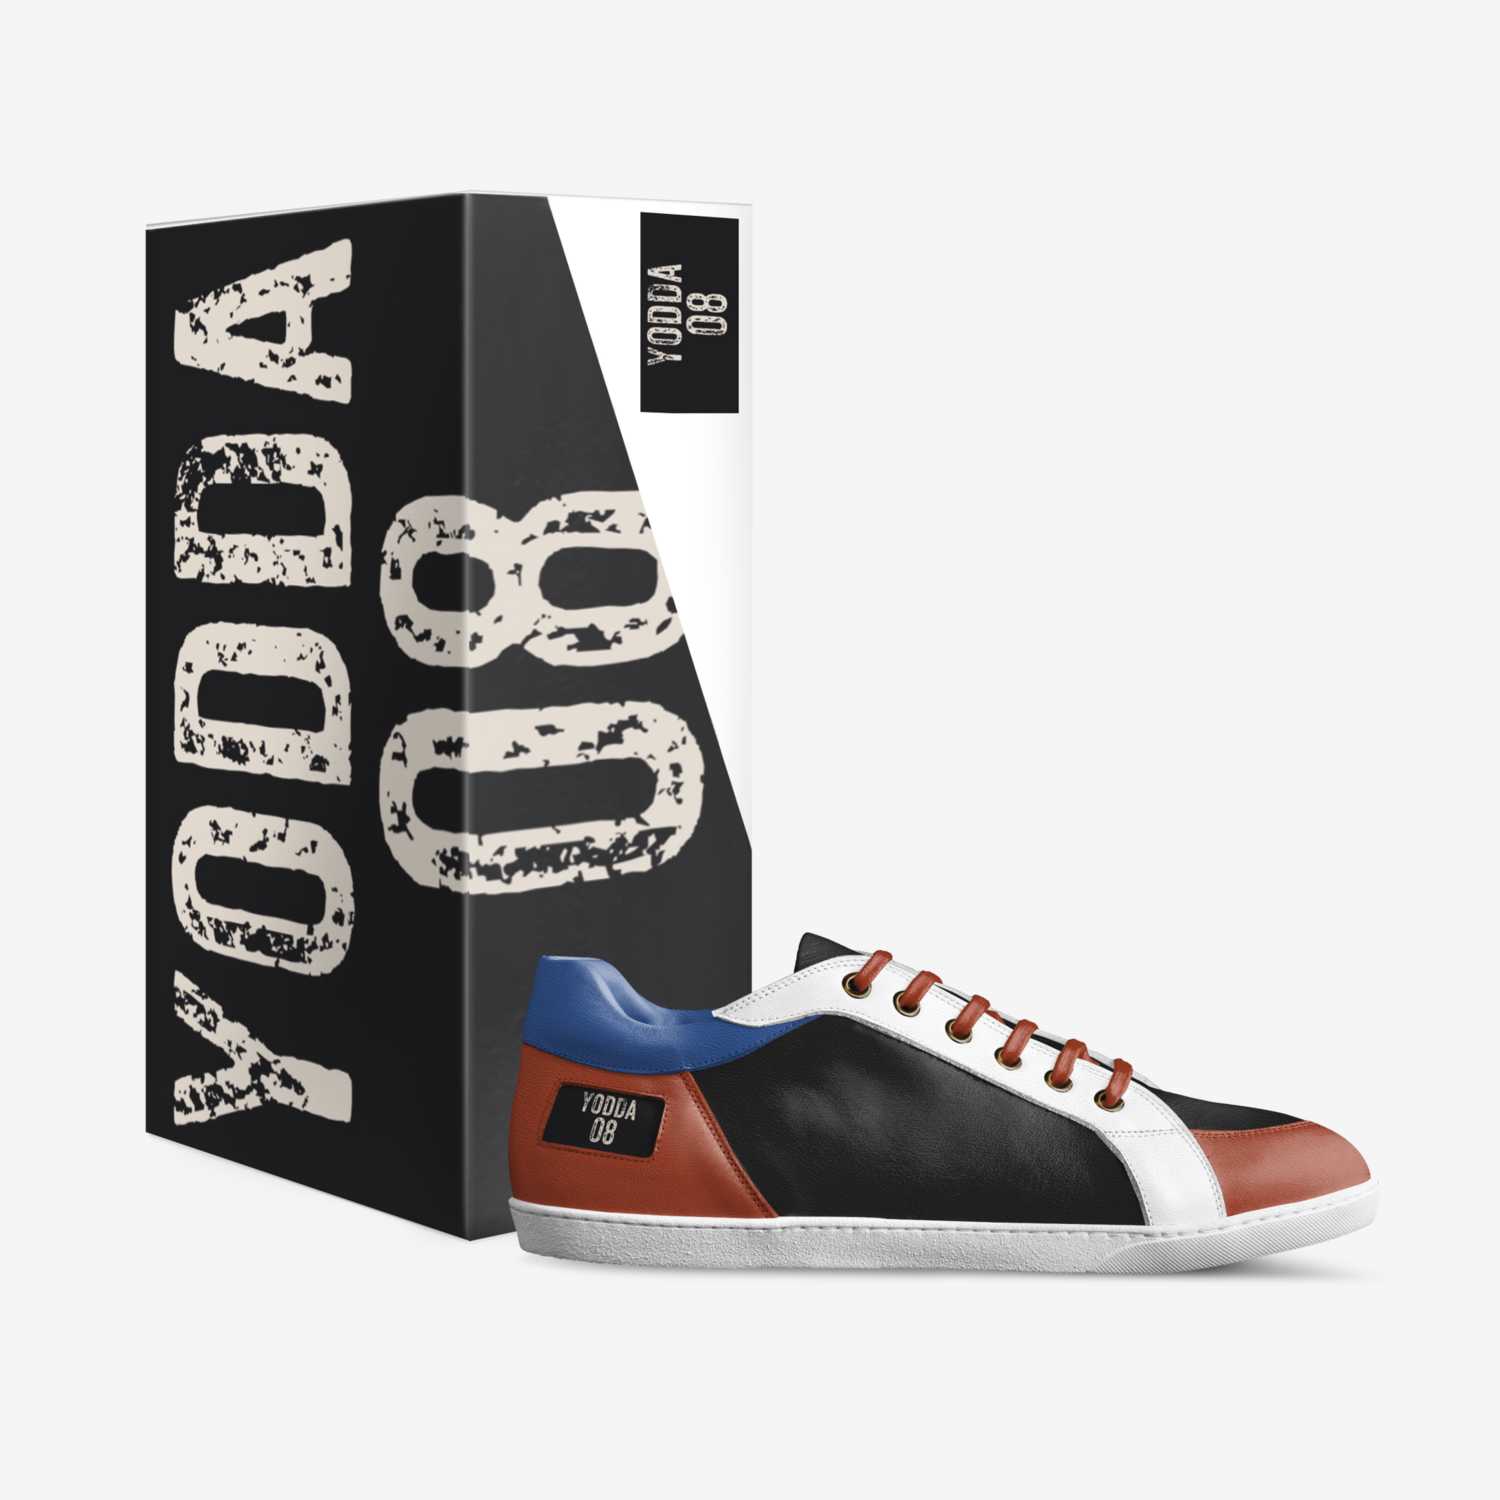 Yodda custom made in Italy shoes by Tiago & Debora Fernandes | Box view